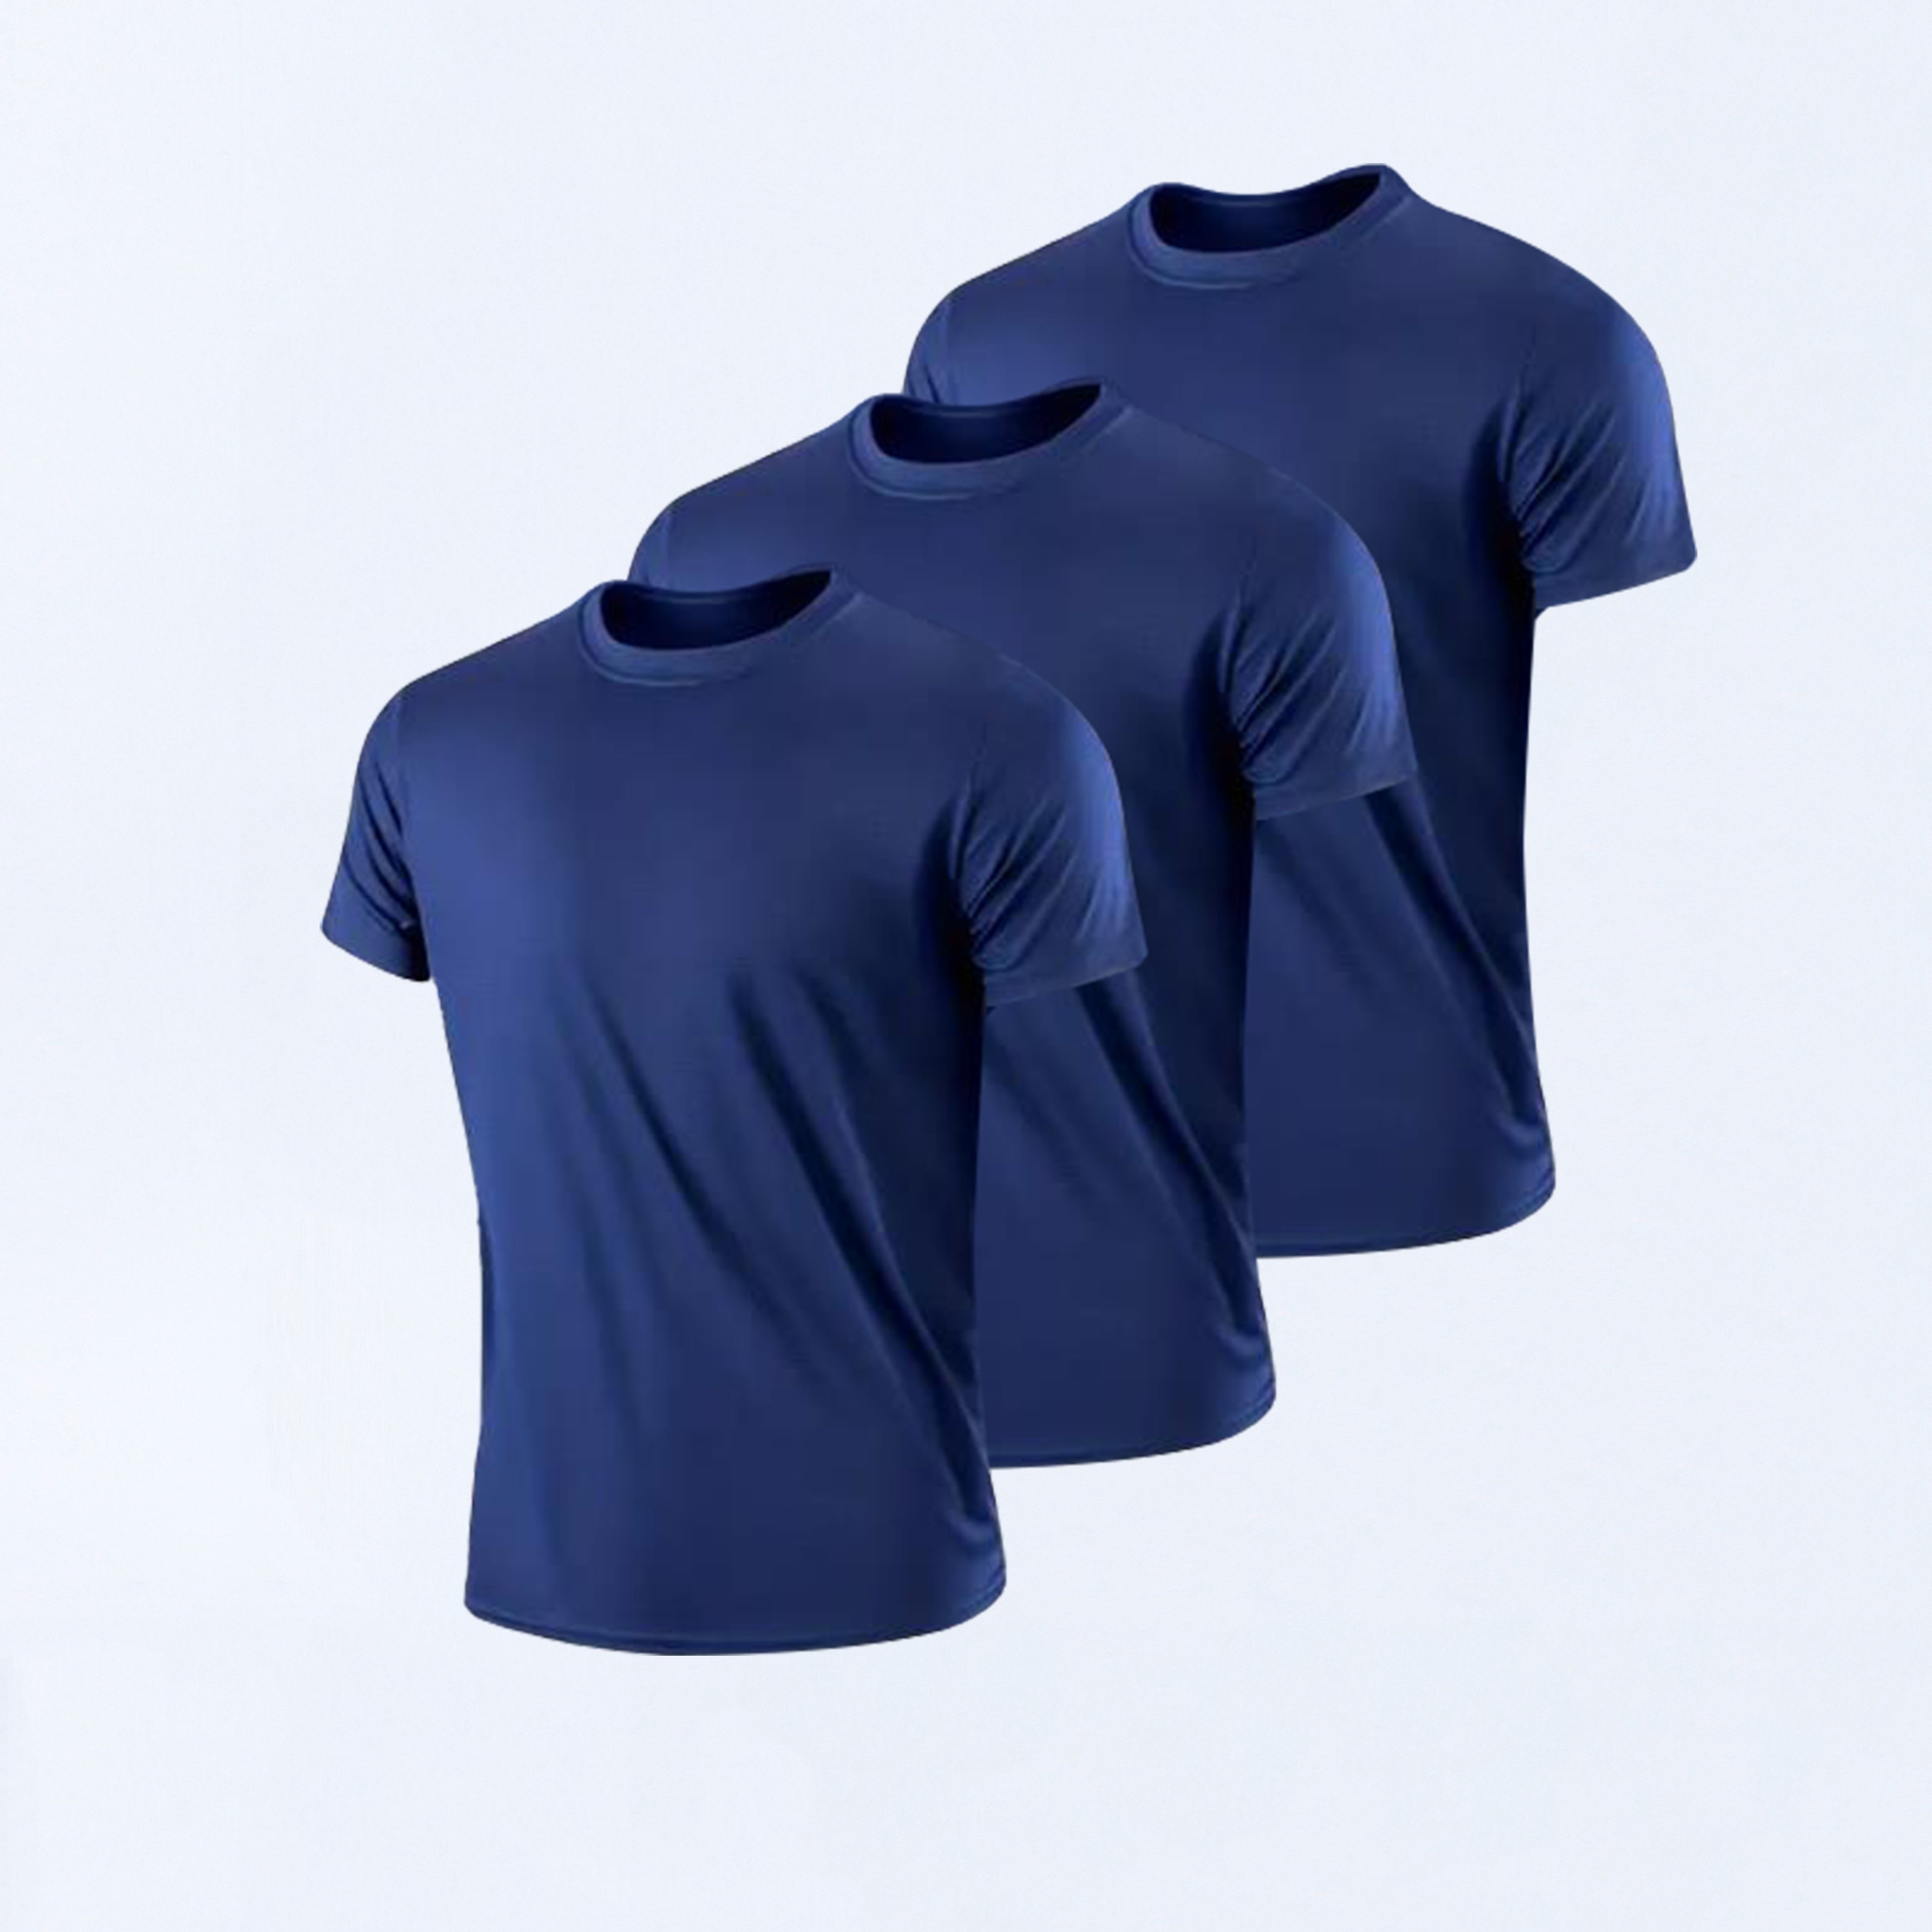 Women's Short Sleeve Running Shirts,Lightweight Quick Dry Athletic